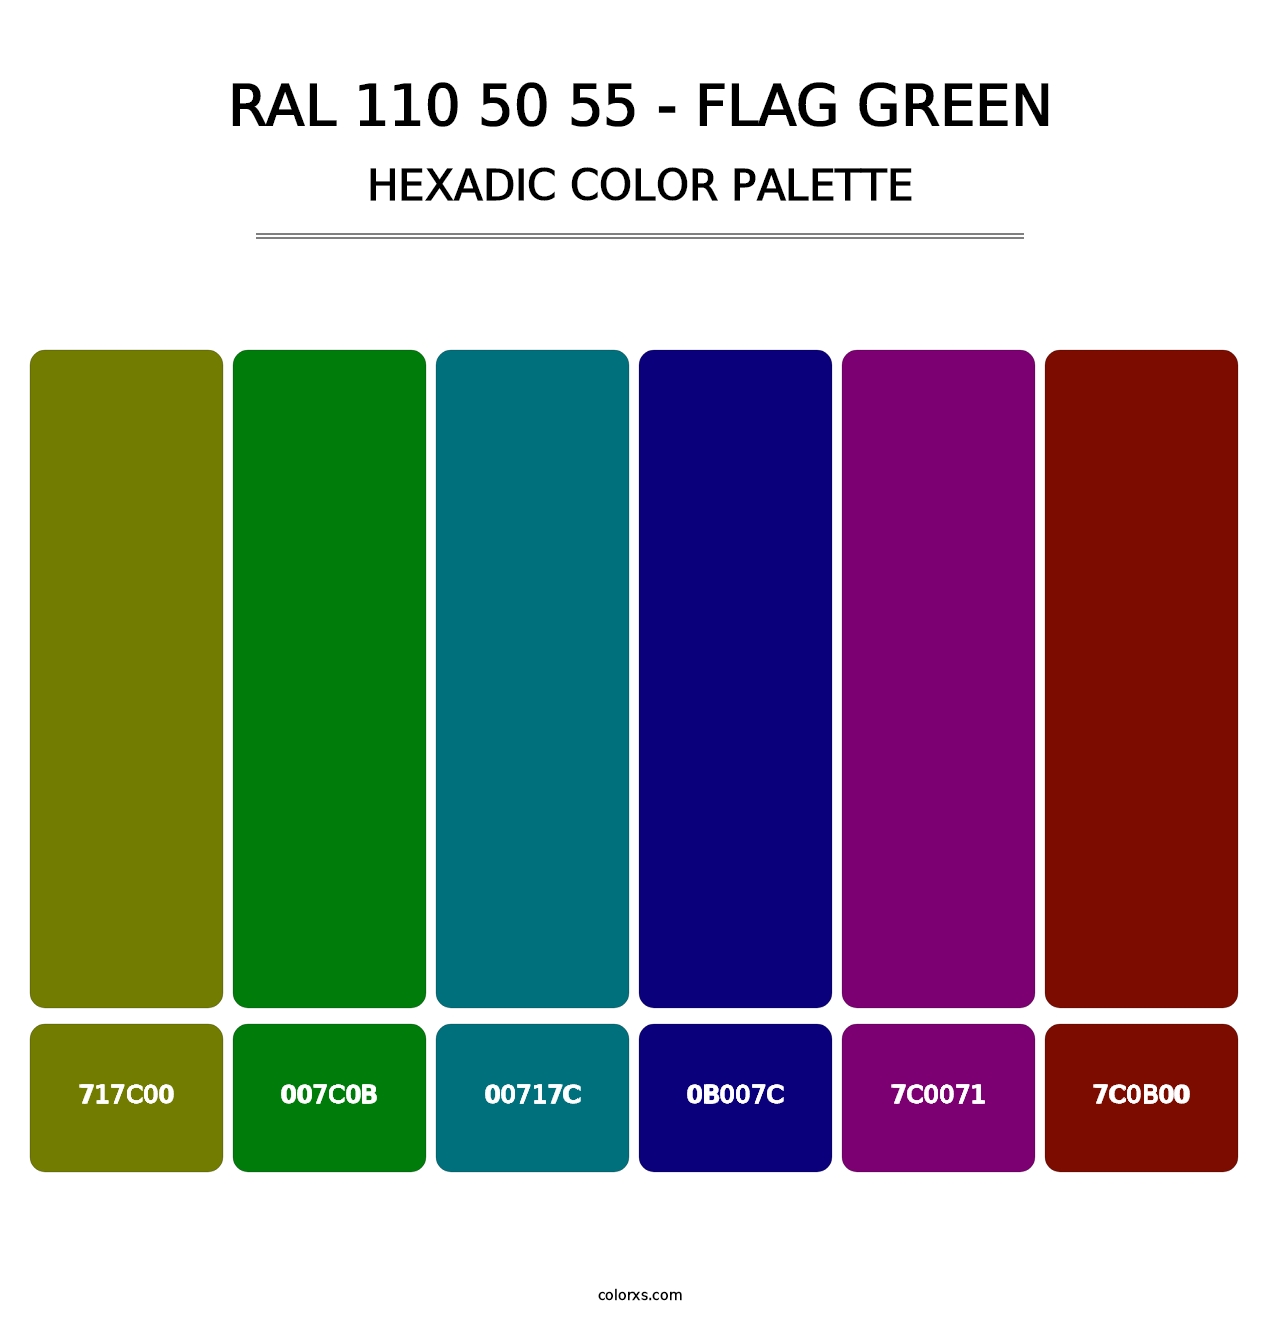 RAL 110 50 55 - Flag Green - Hexadic Color Palette